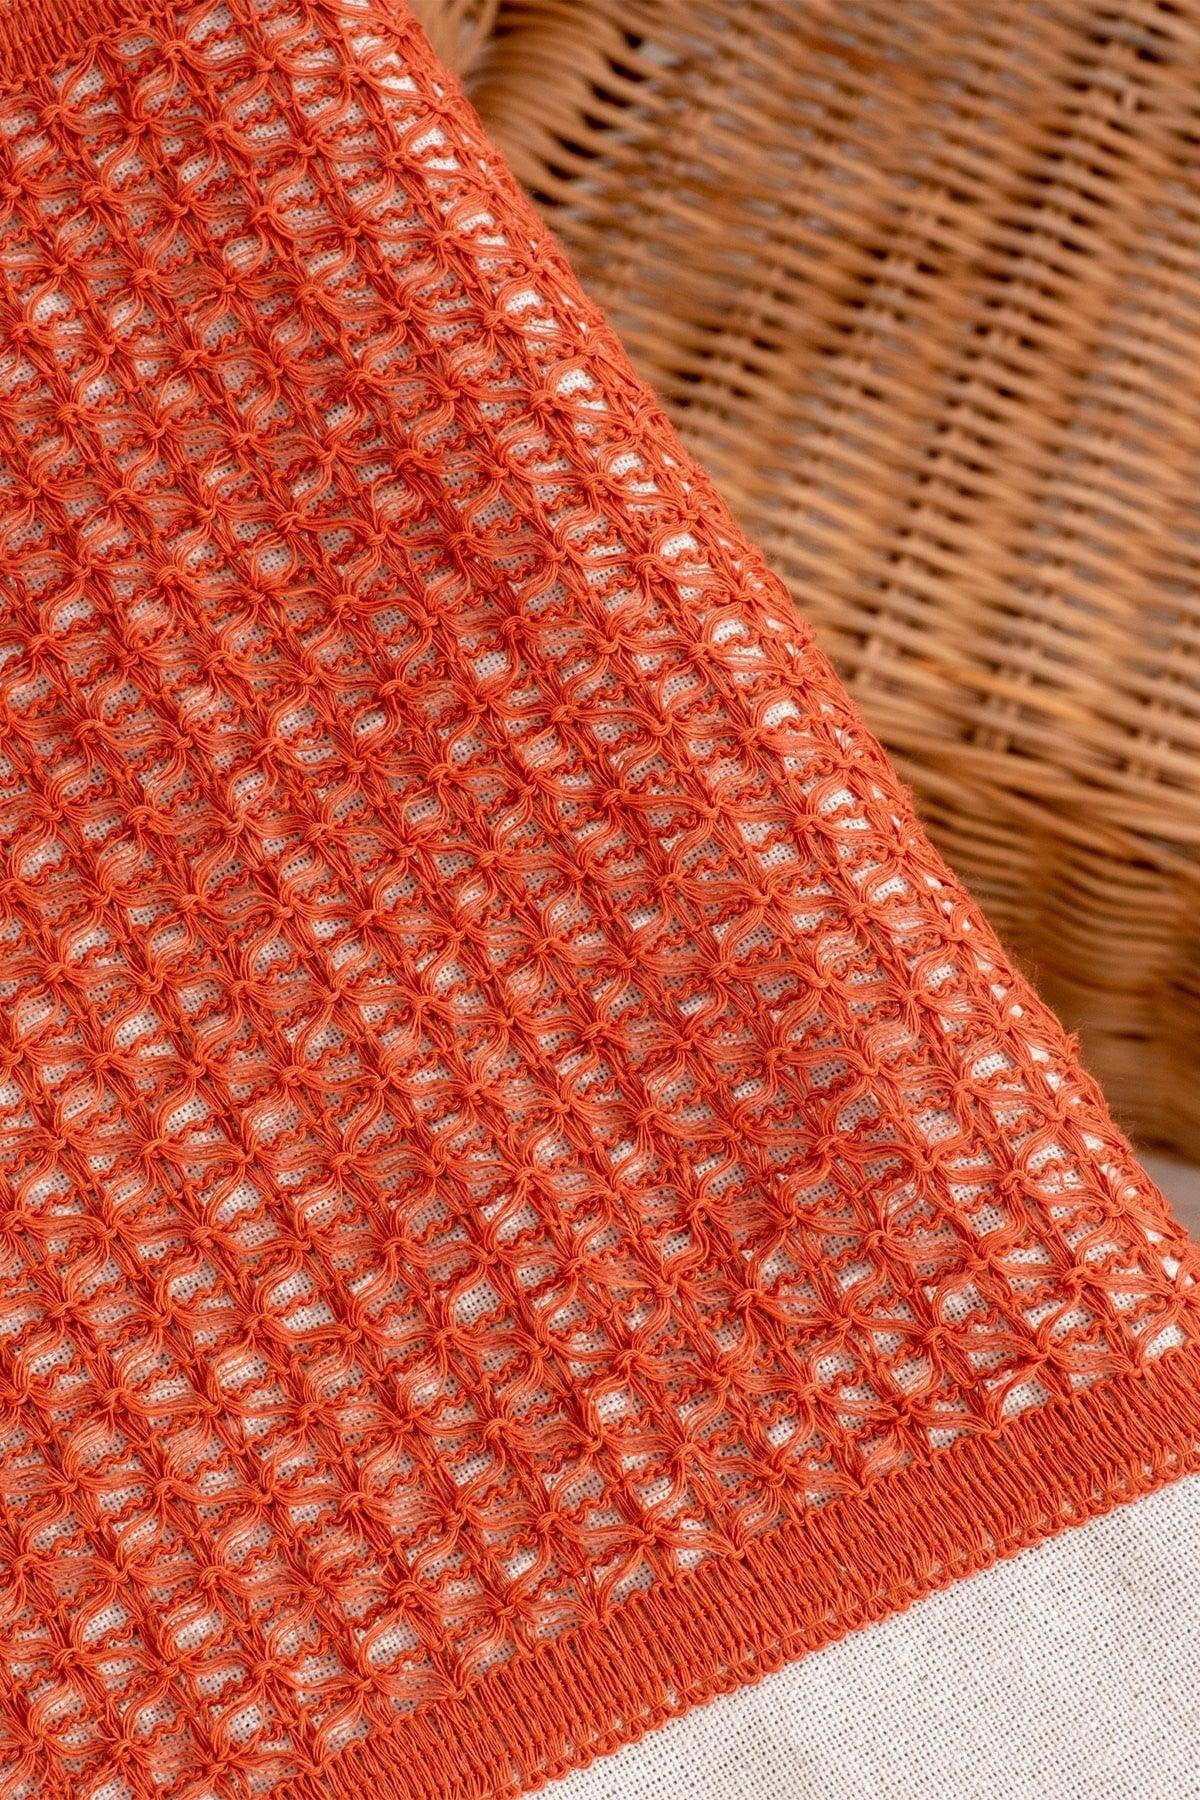 Linen Top Full Lace Tasseled Tile in the Middle 45x150 Cm Runner Table Cloth - Swordslife